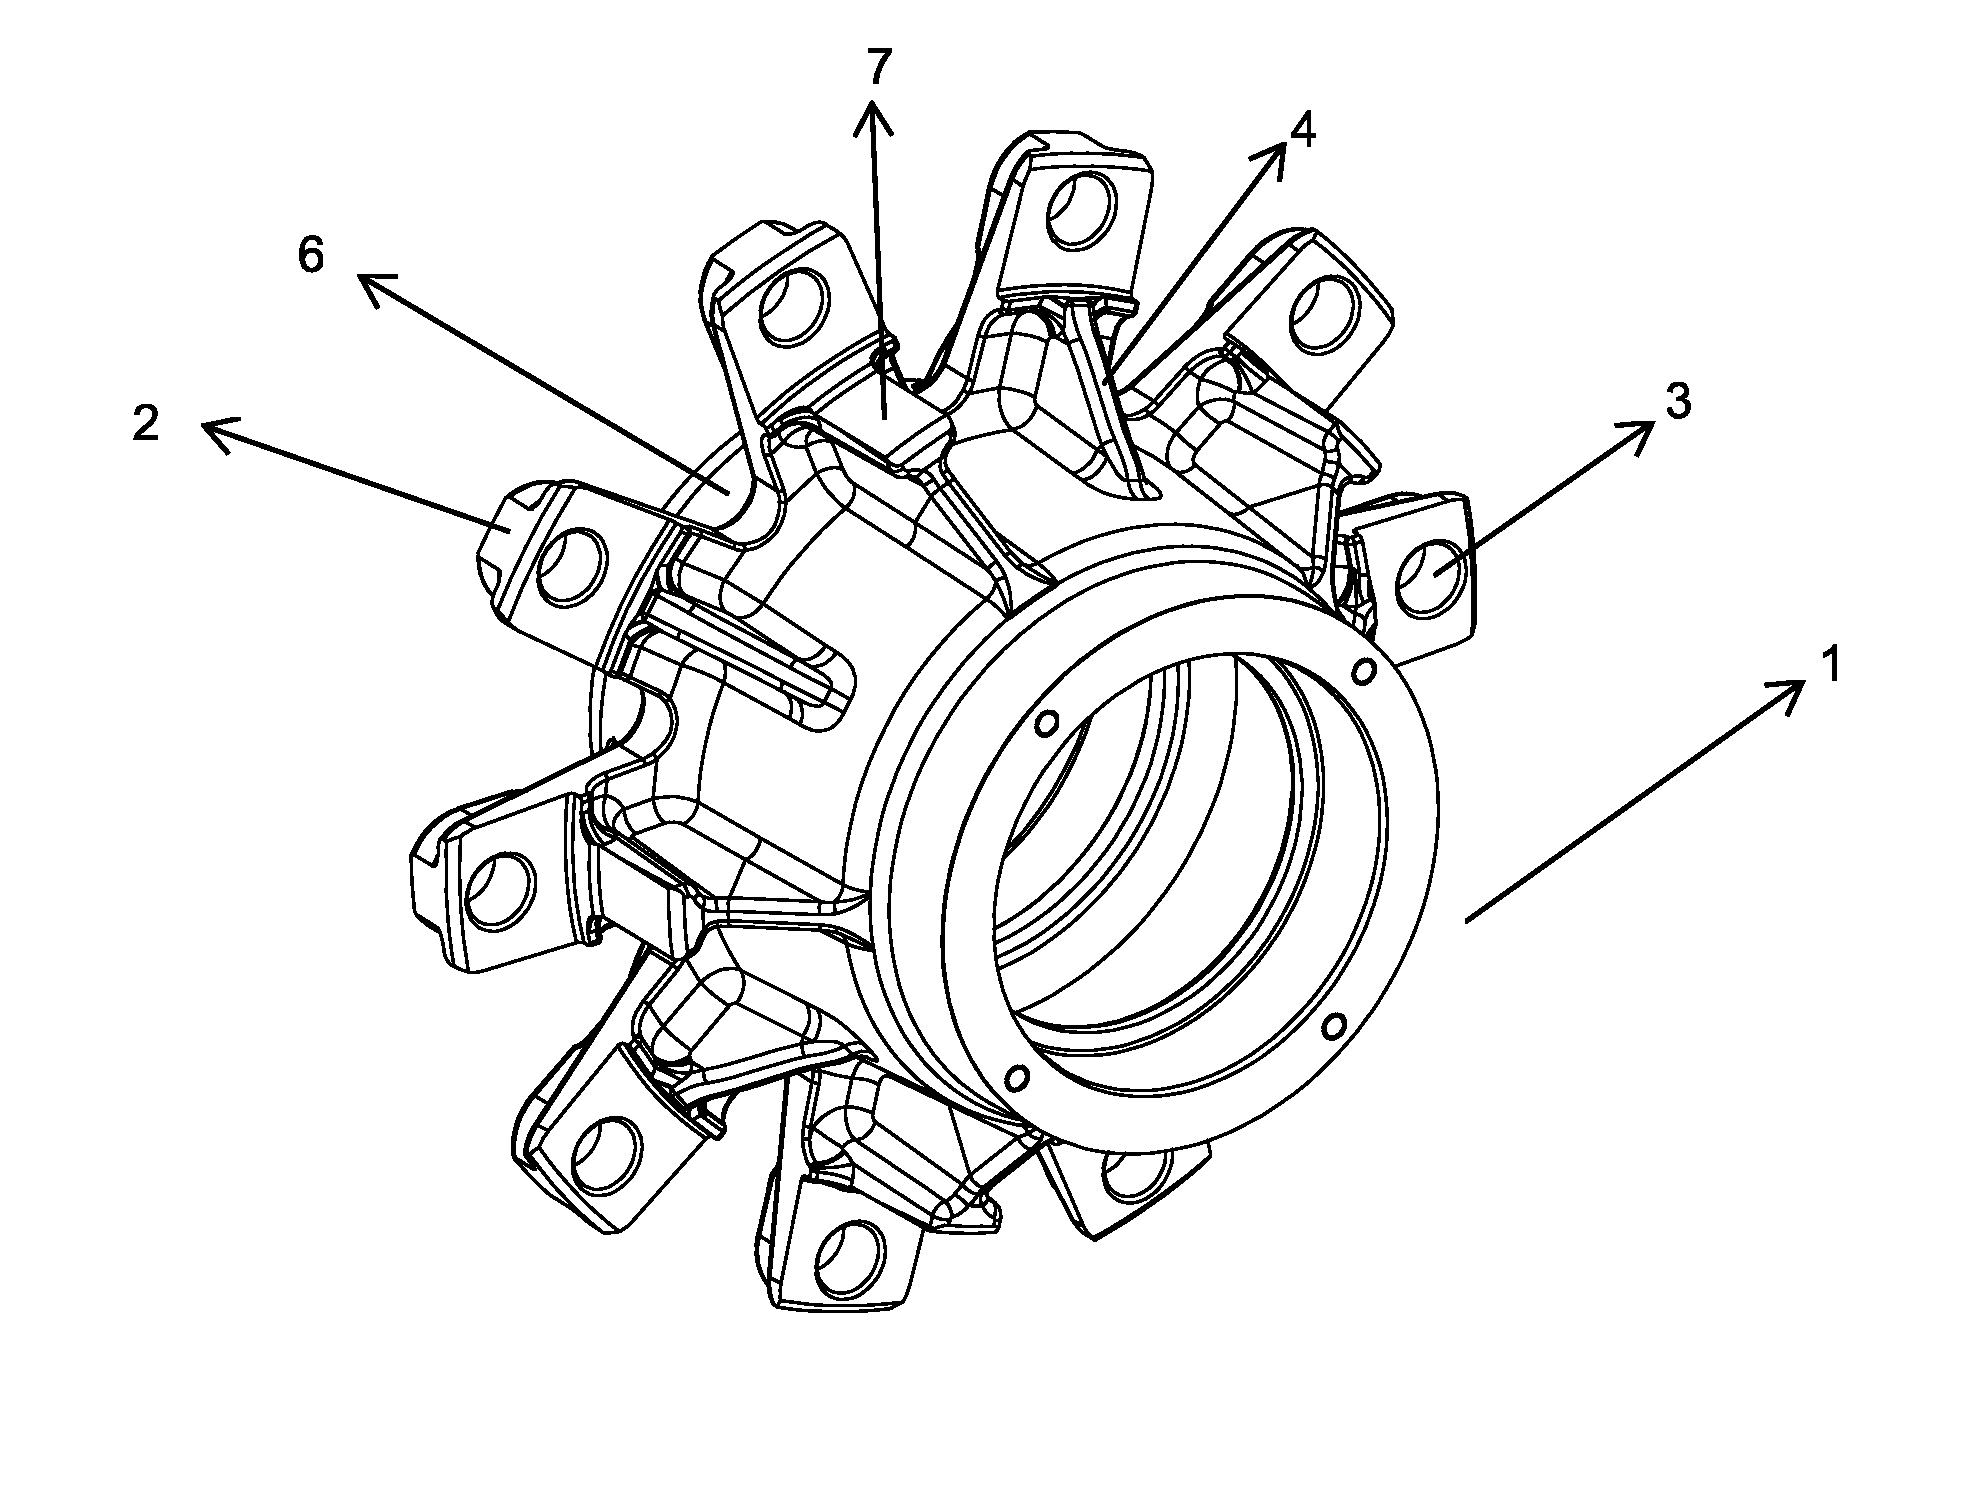 Wheel hub for vehicle axle